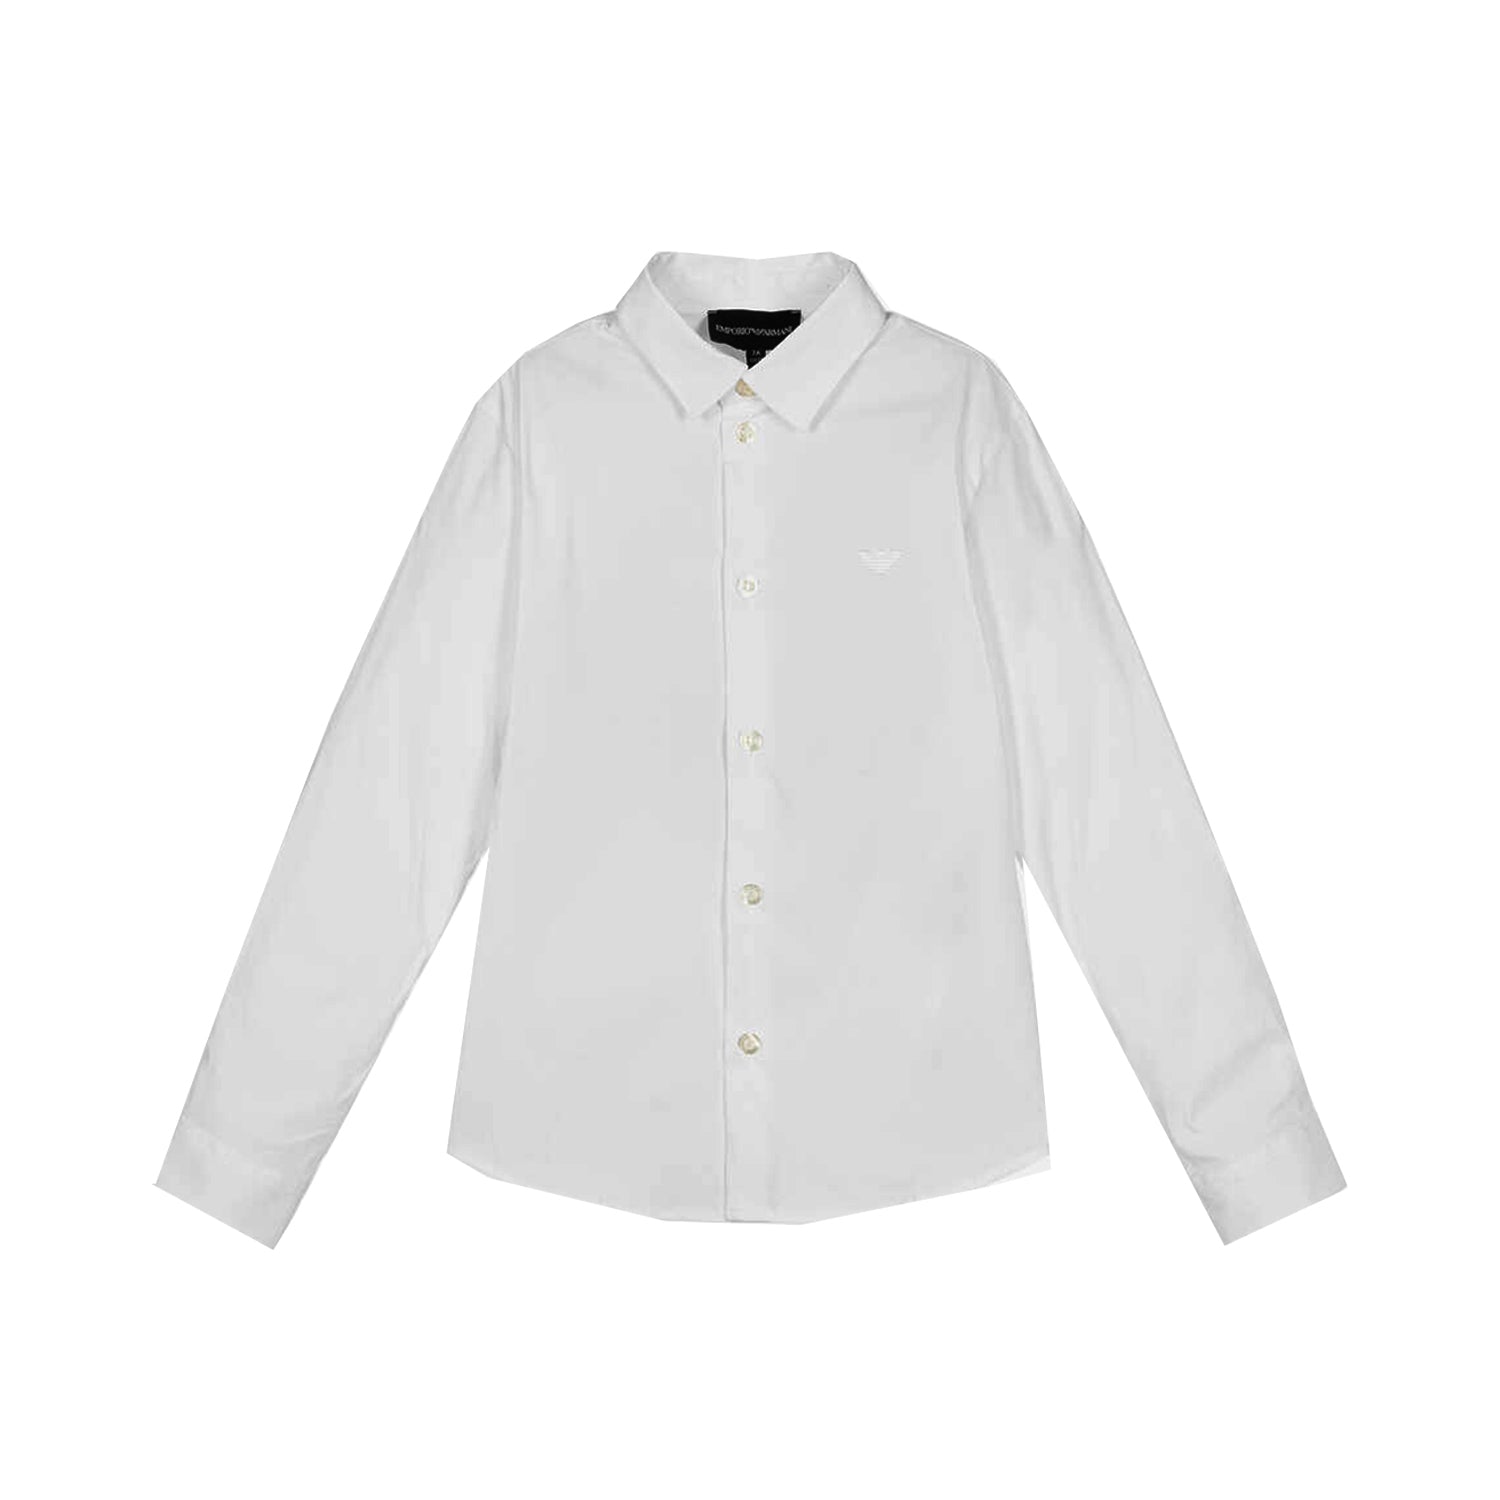 Emporio Armani Classic Button Up Shirt - White